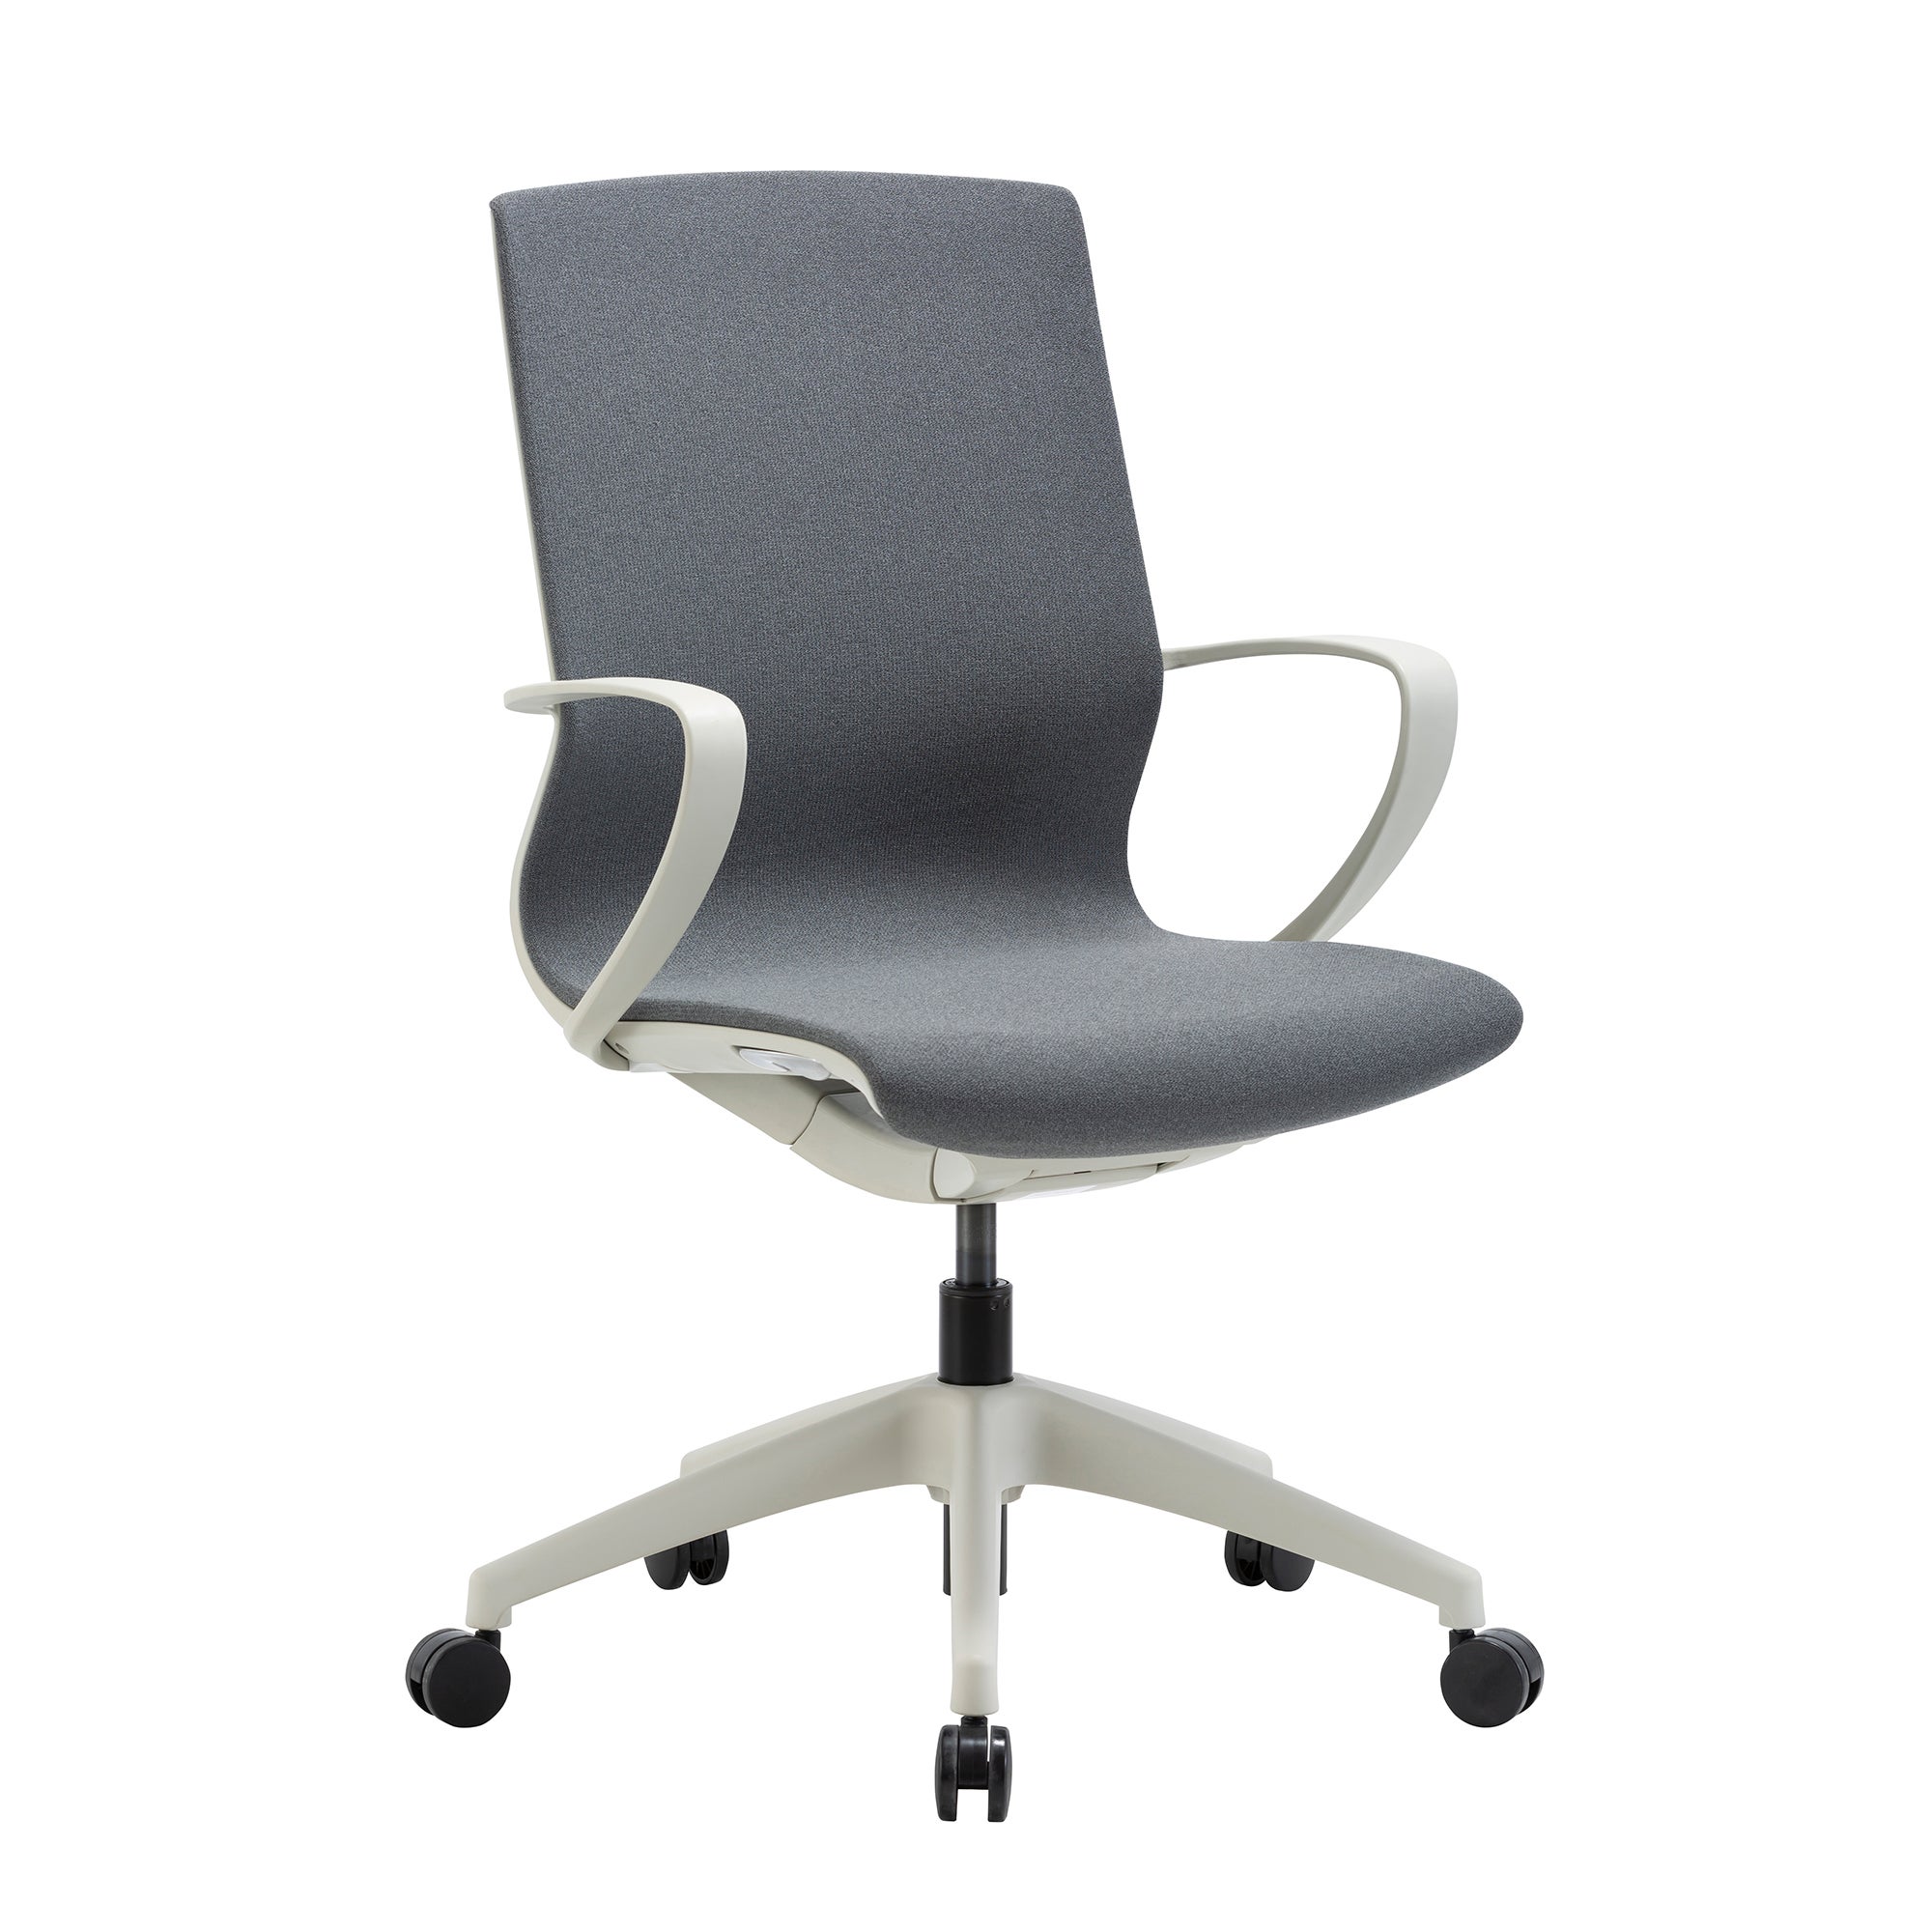 Marics Office Task Chair In Grey